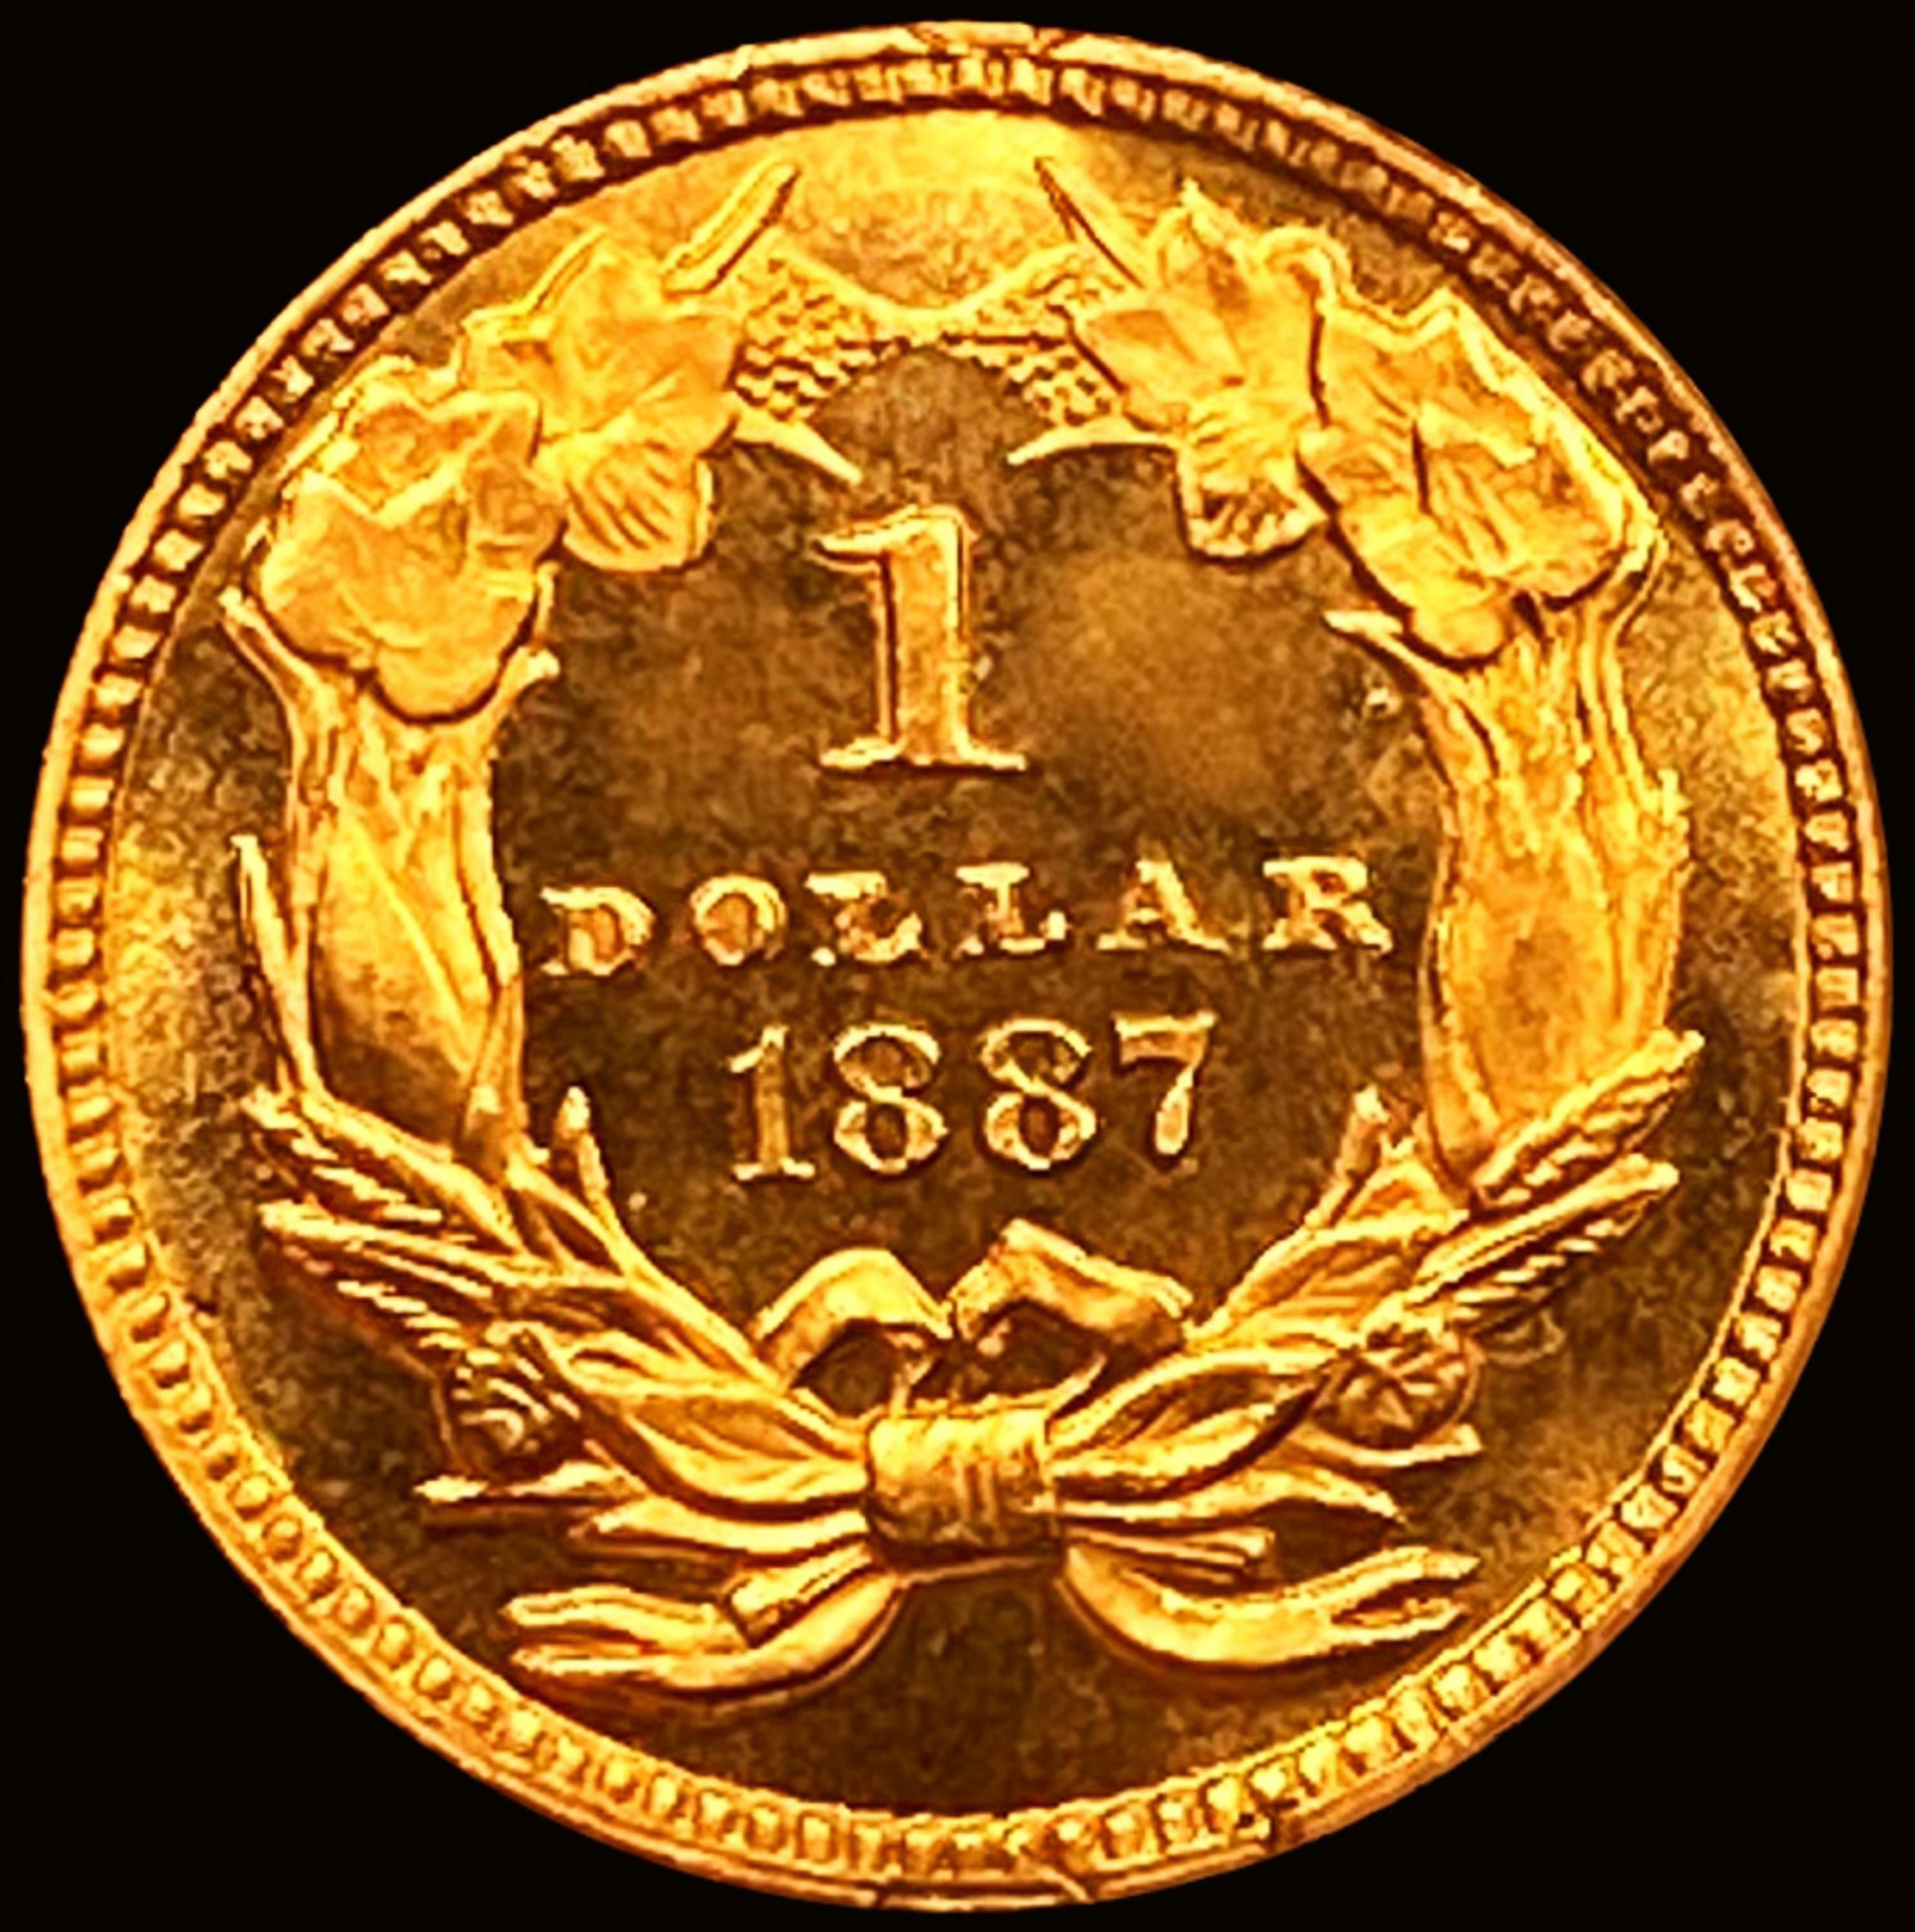 1887 Rare Gold Dollar GEM PROOF CAM